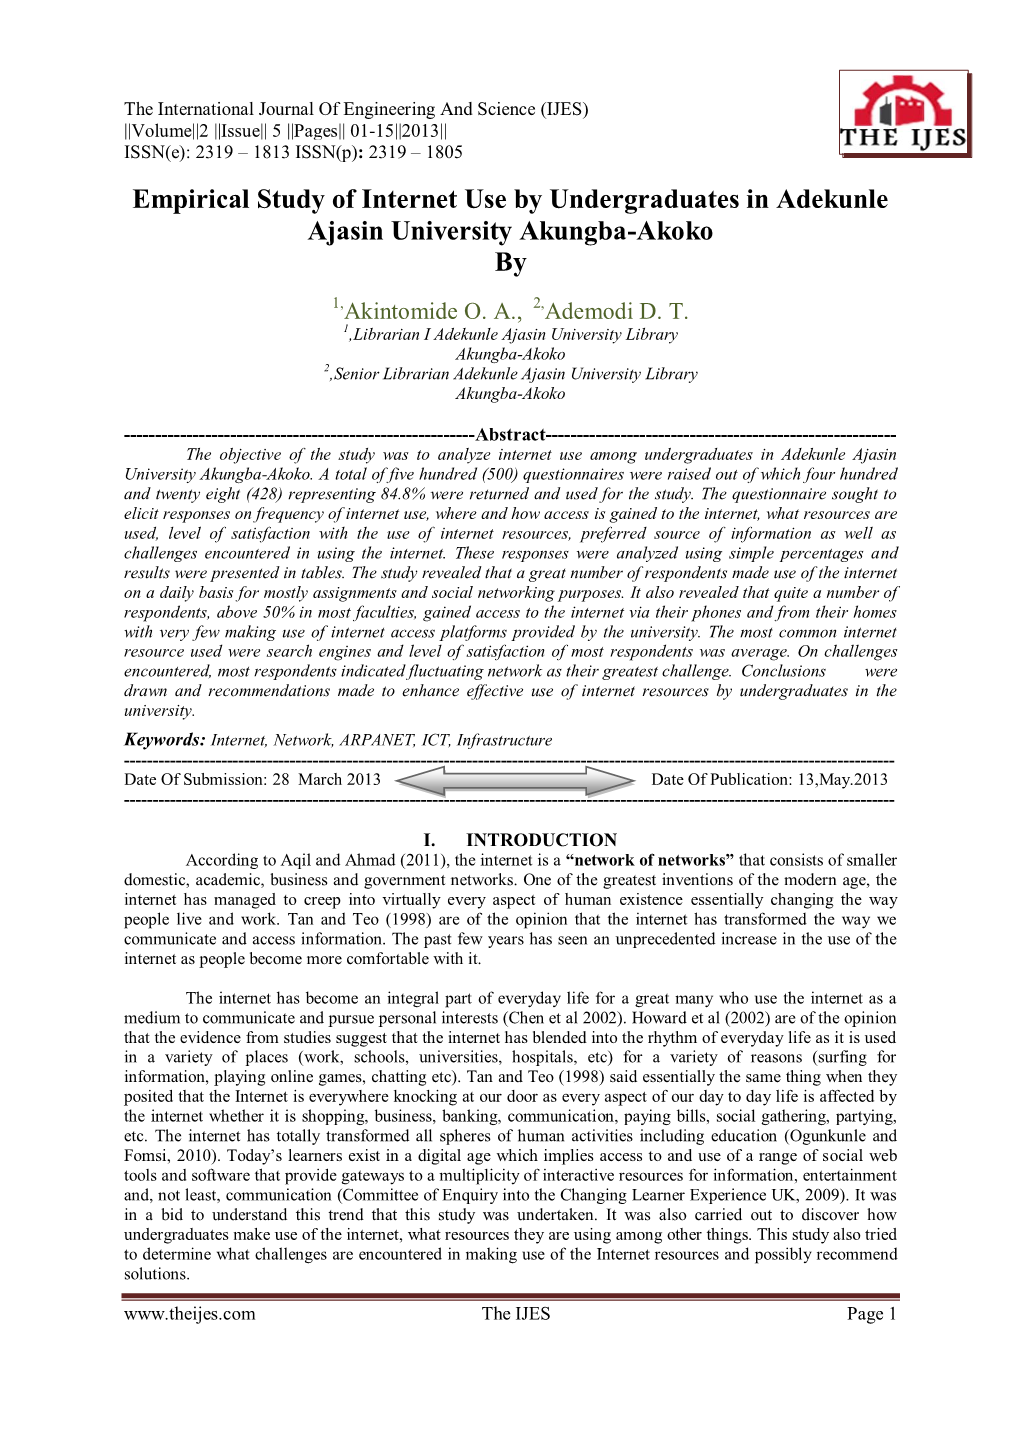 Empirical Study of Internet Use by Undergraduates in Adekunle Ajasin University Akungba-Akoko By